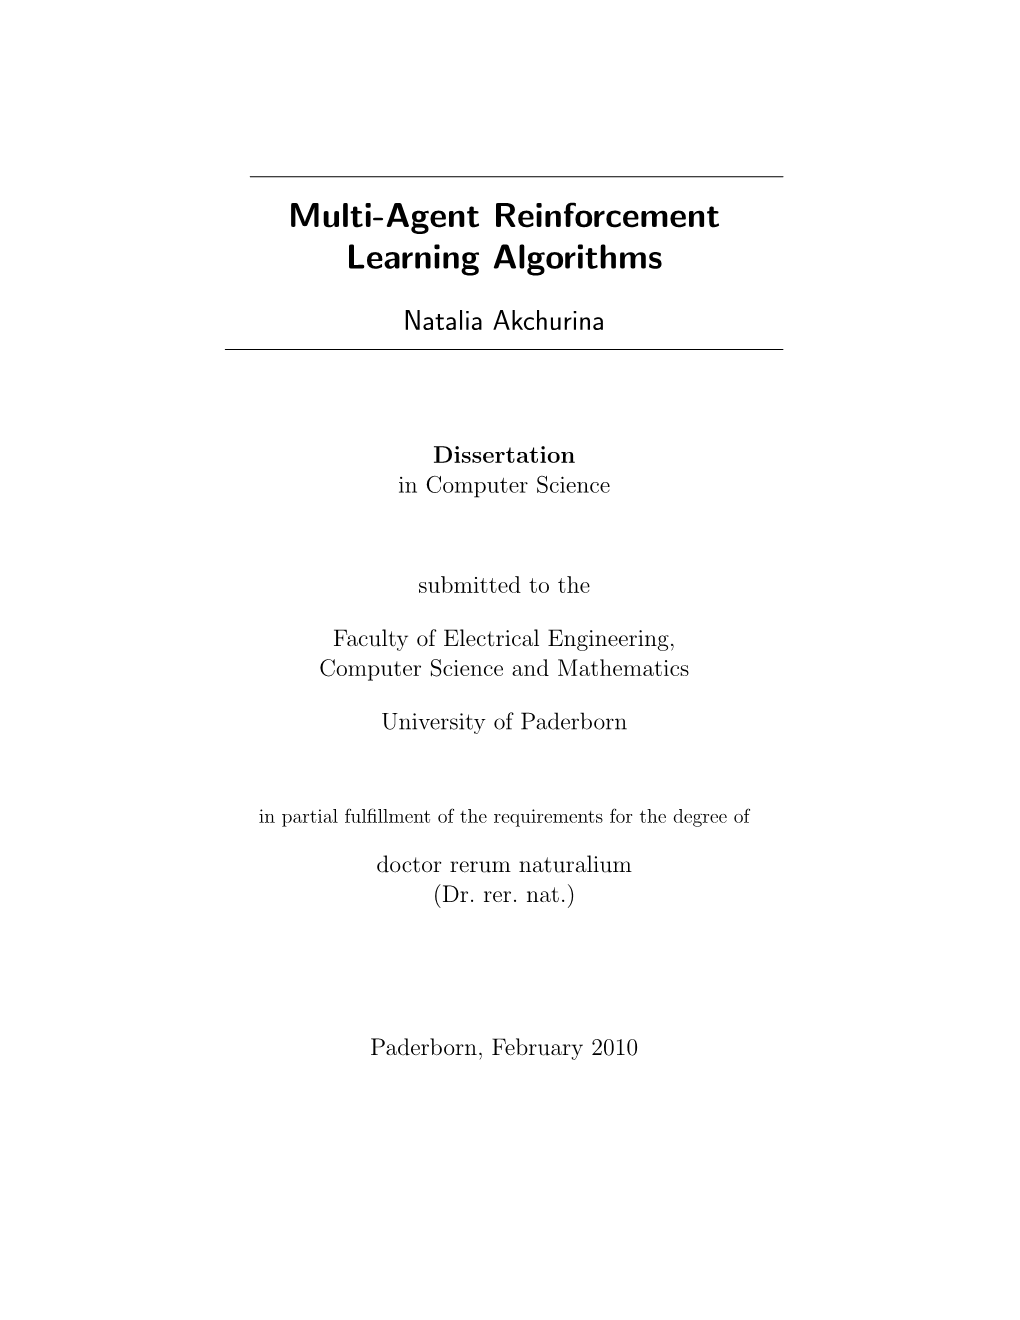 Multi-Agent Reinforcement Learning Algorithms